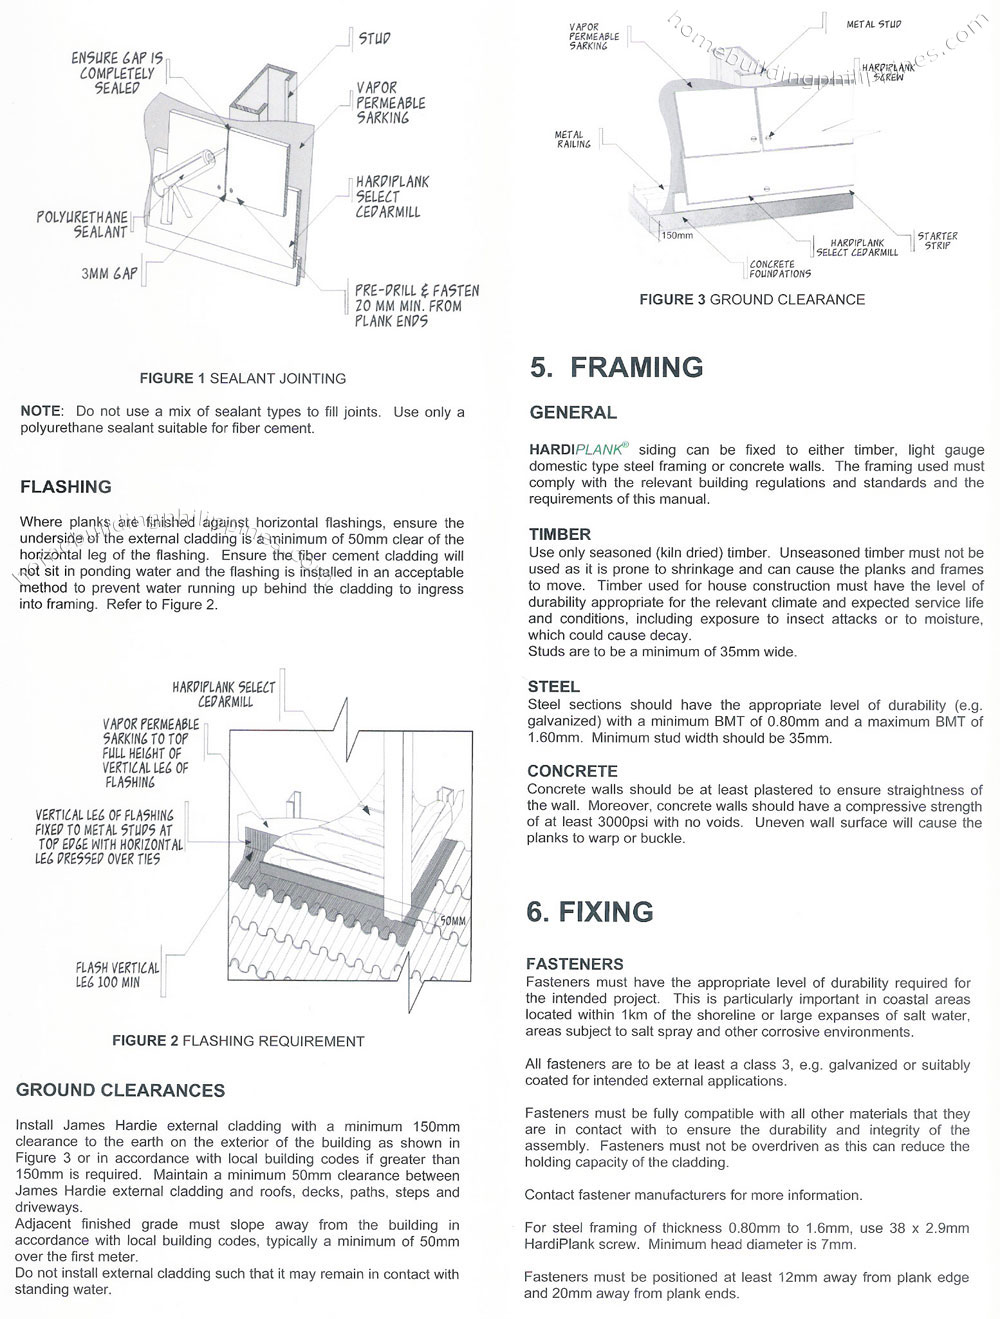 HardiePlank Durable Siding Board Installation Manual